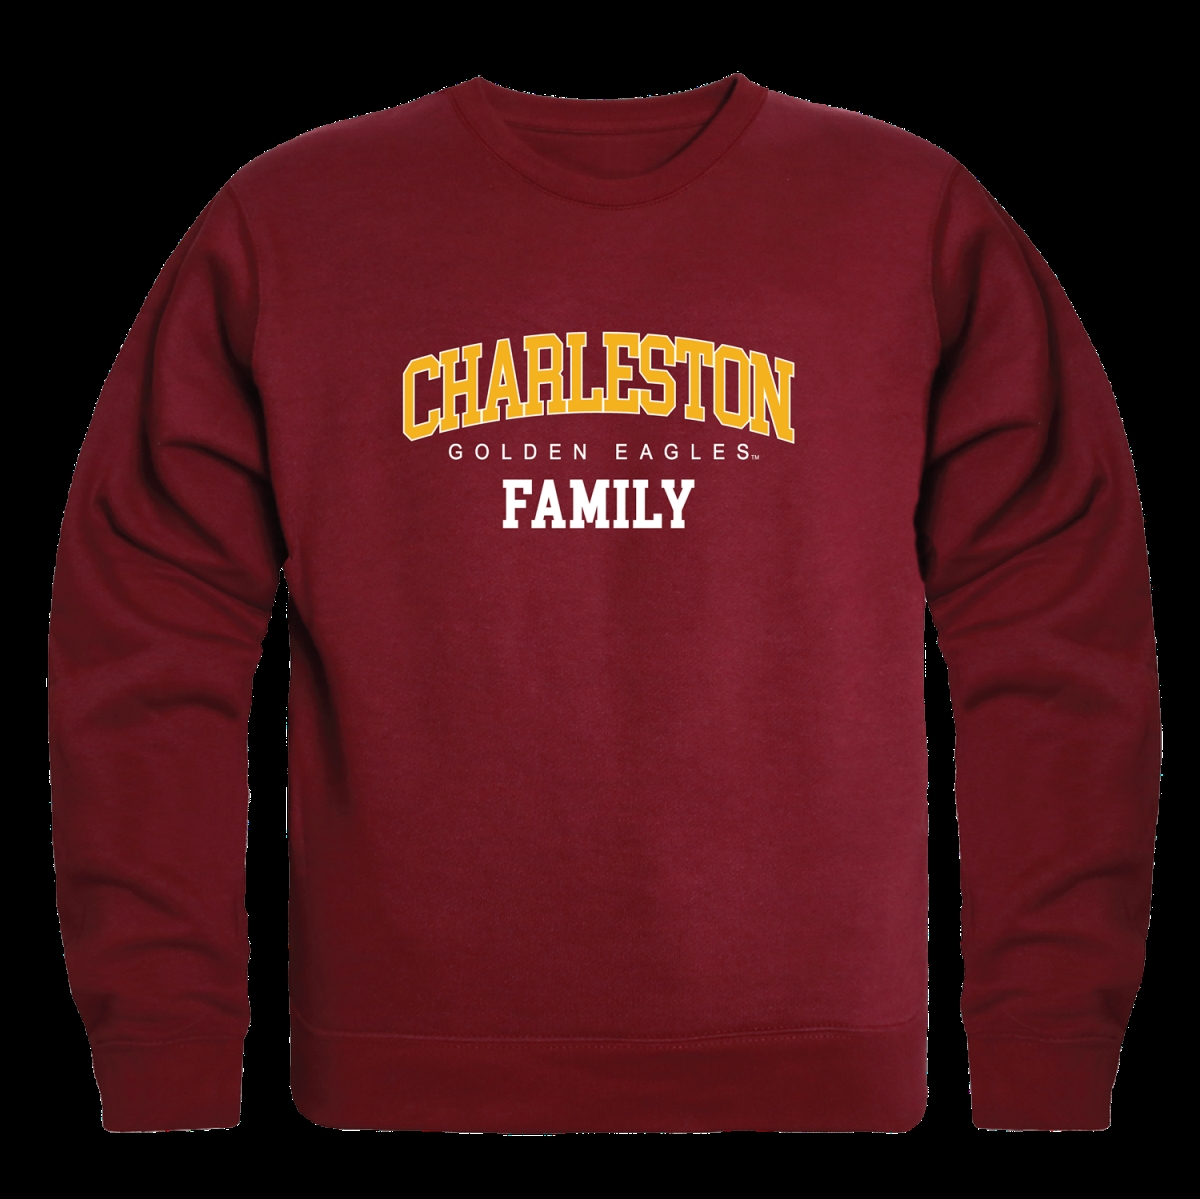 W Republic 572-630-MAR-04 College of Charleston Golden Eagles Family Crewneck Sweatshirt&#44; Maroon - Extra Large